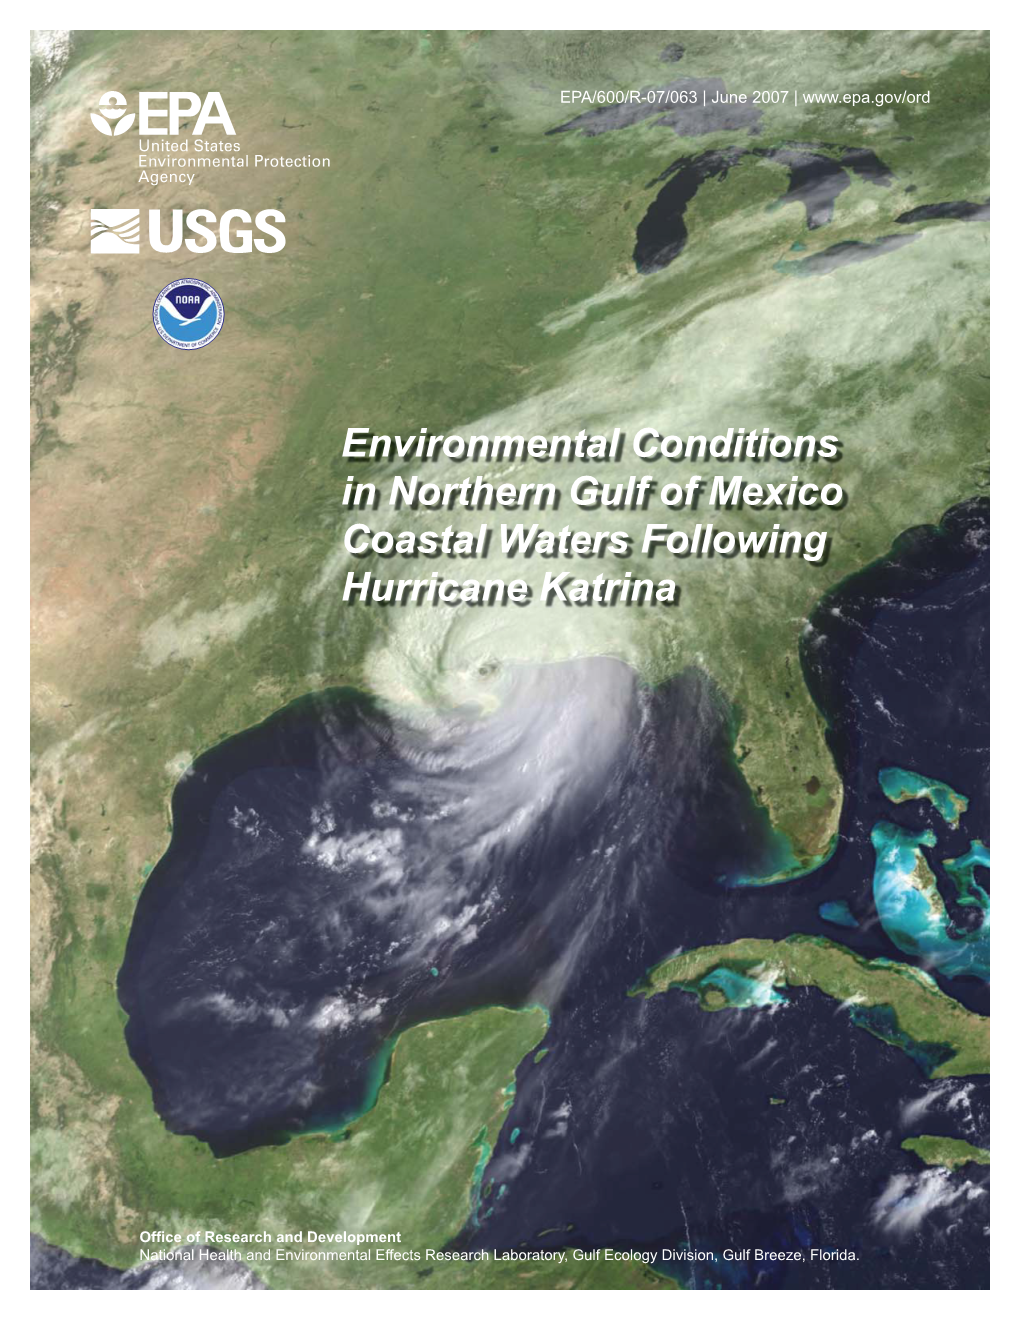 EPA Hurricane Katrina Report 7-25-07.Indd